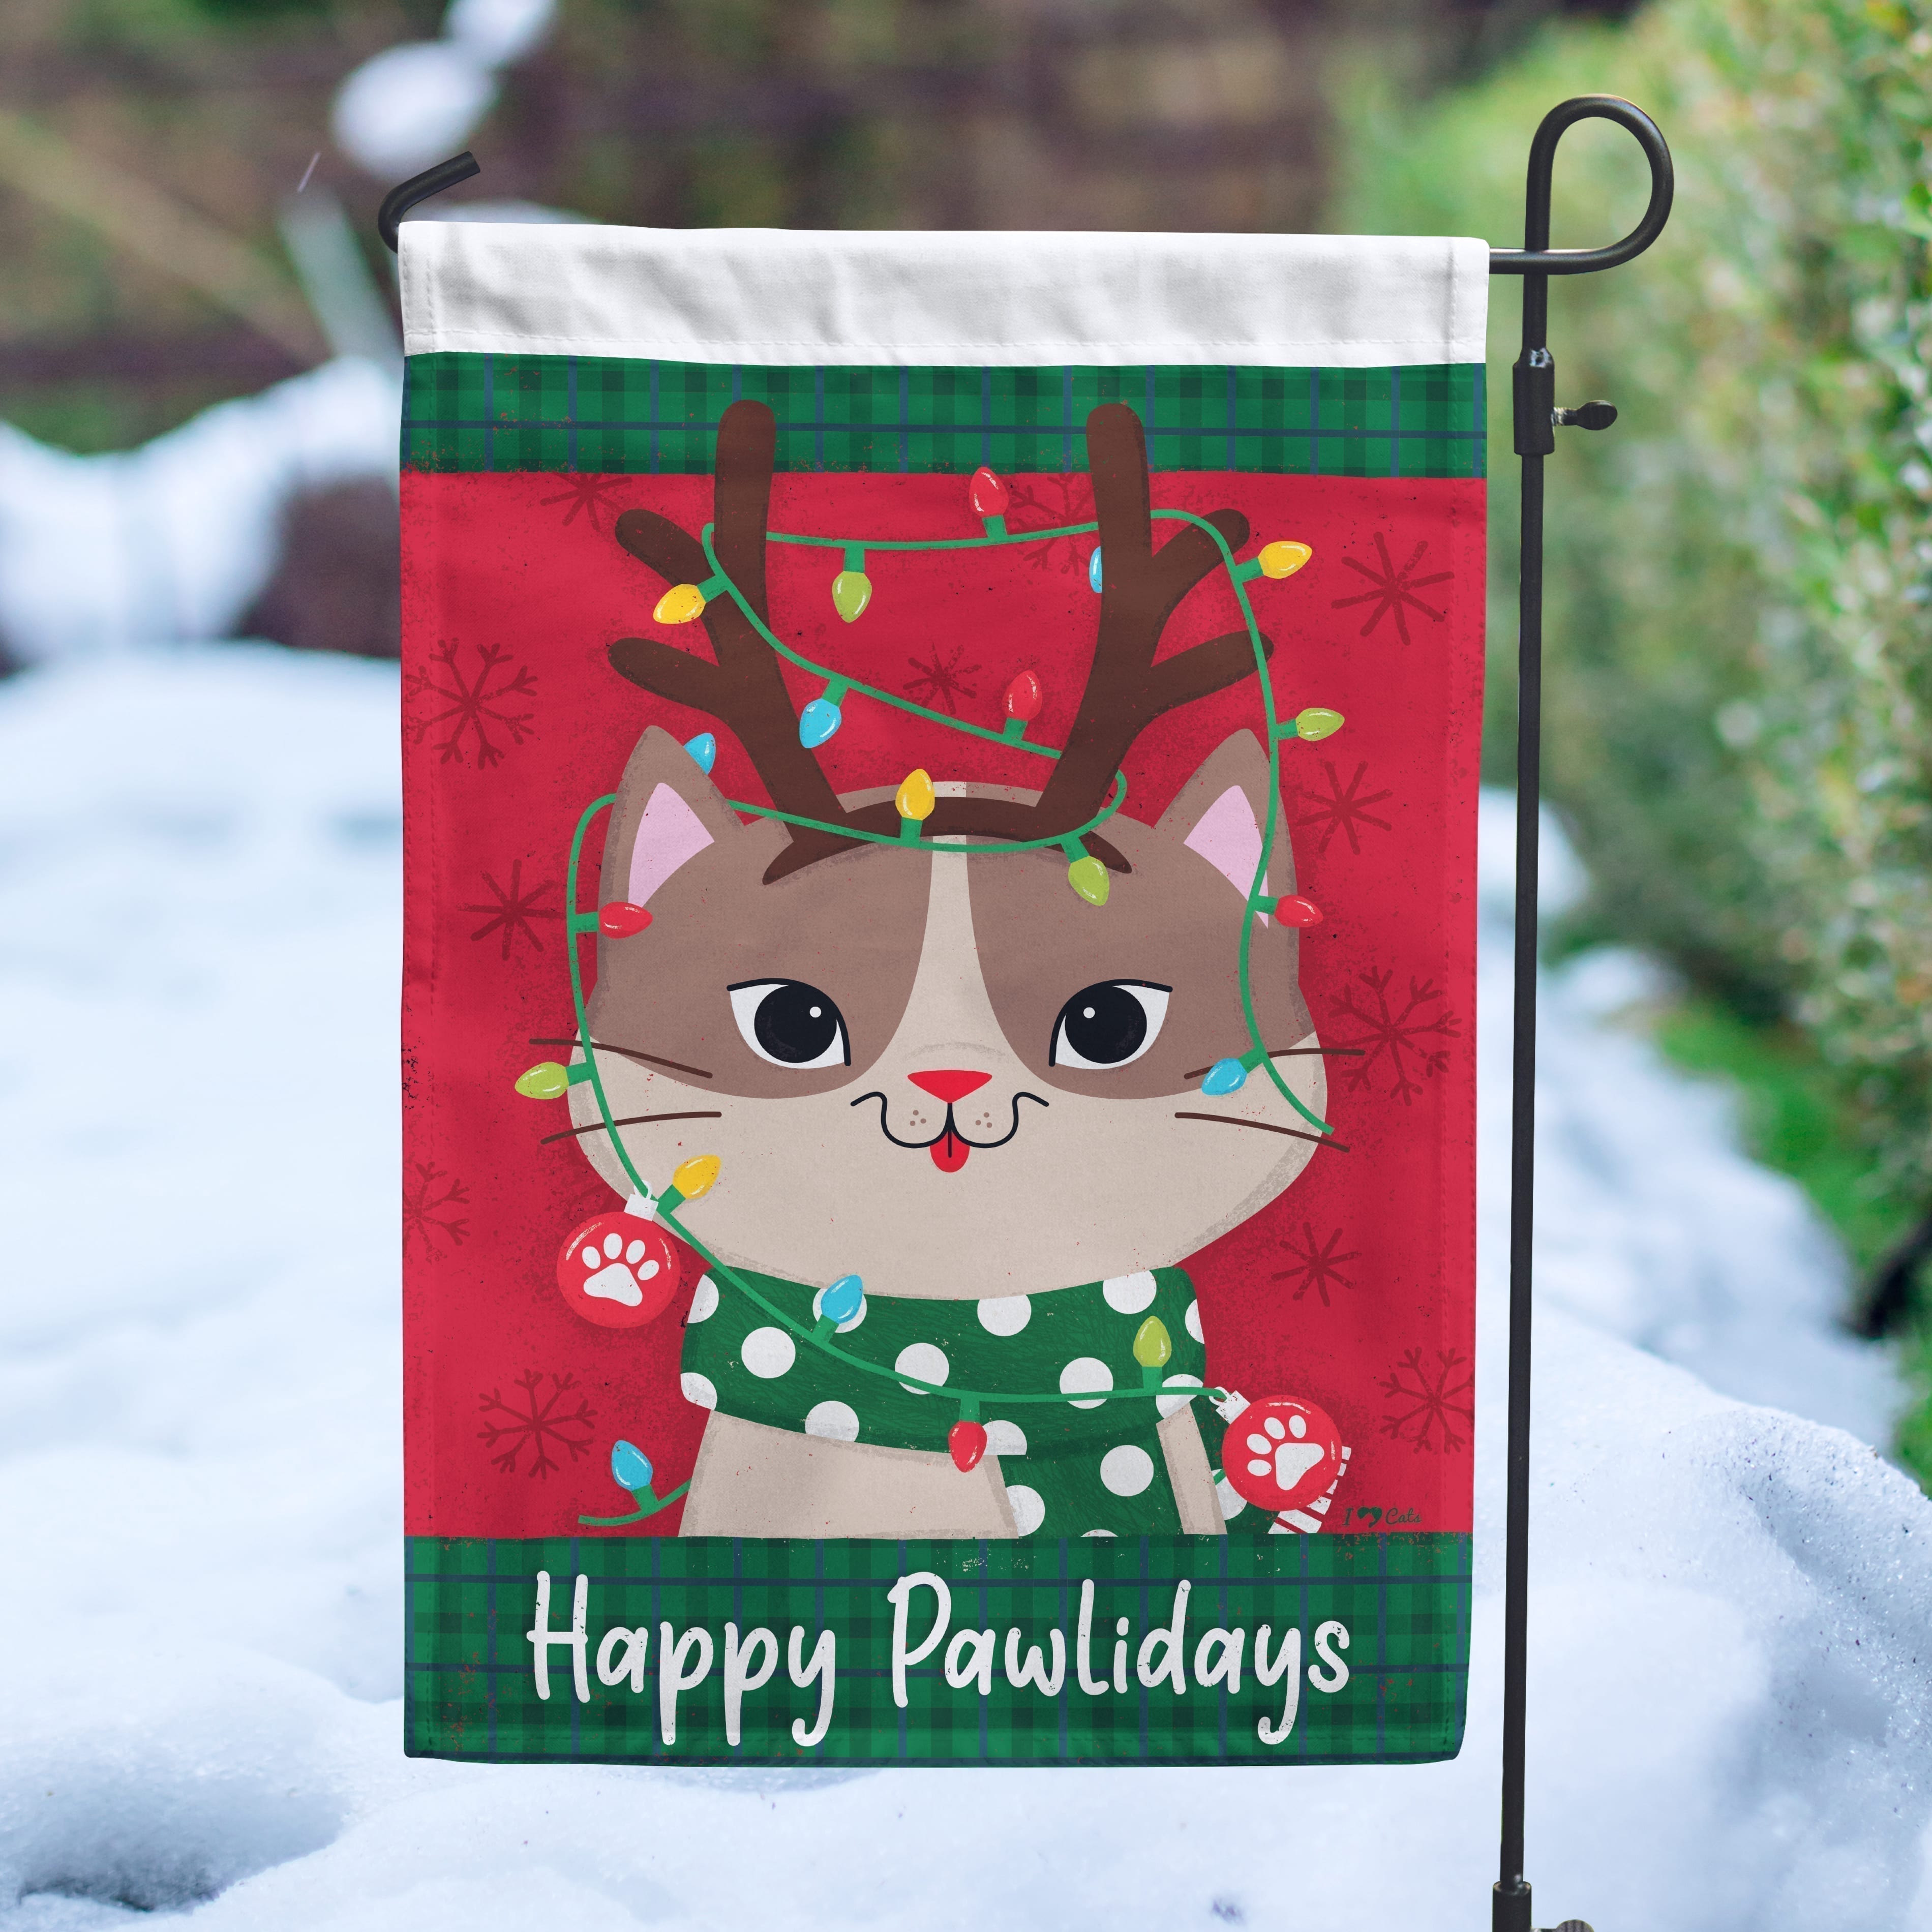 Happy Pawlidays Reindeer Kitty Garden Flag- Get 2 for $14.99!